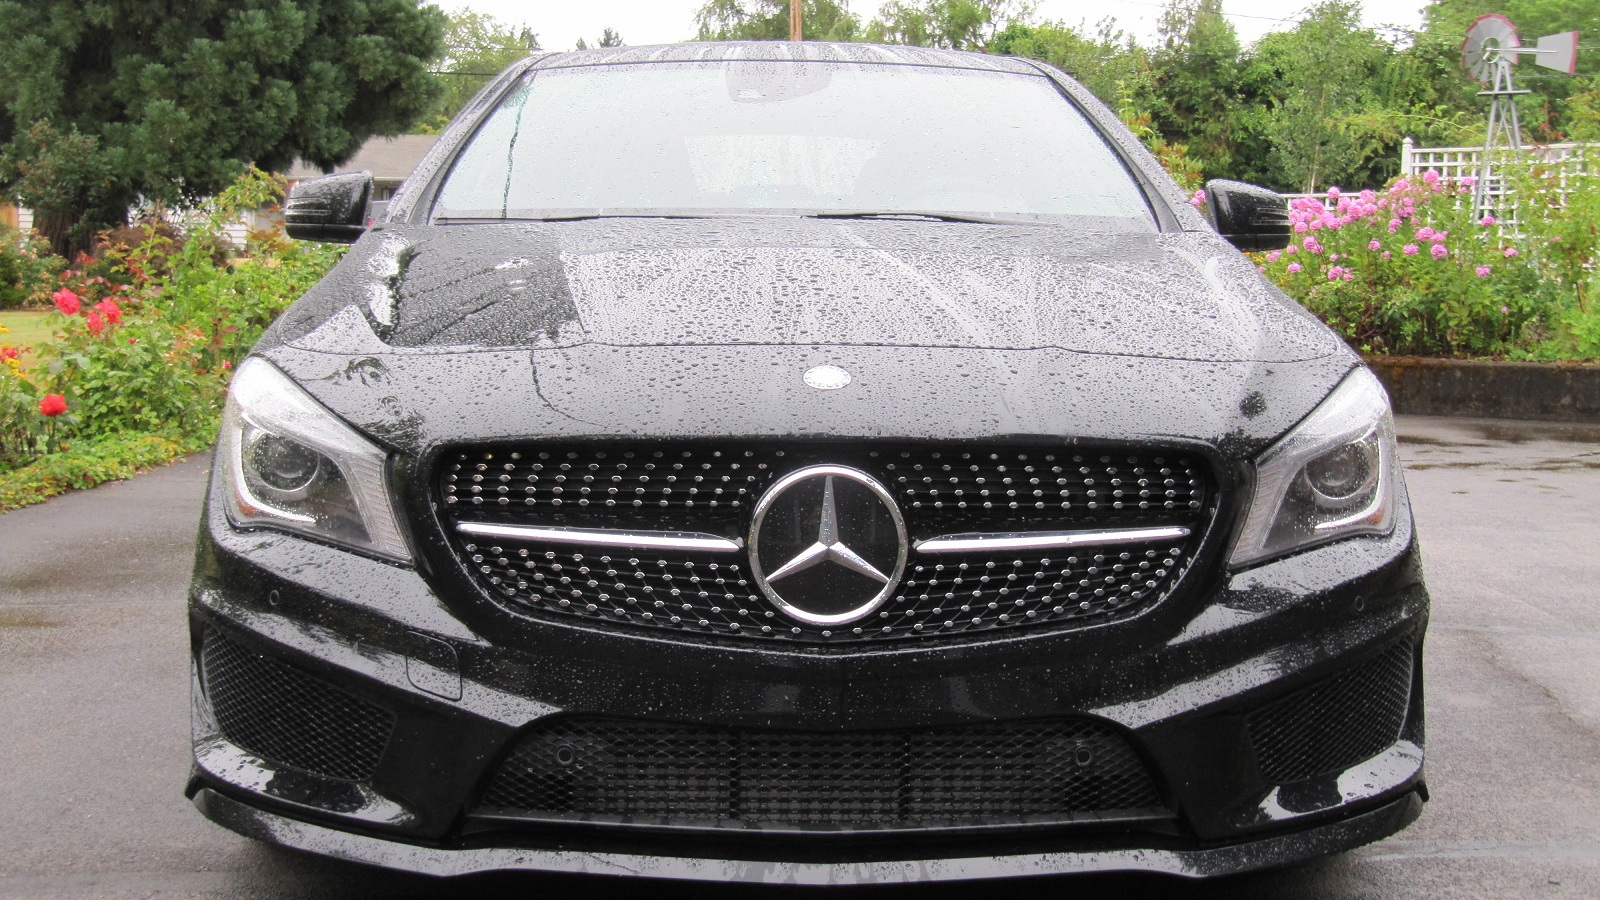 2014 Mercedes-Benz CLA 250, test drive in Oregon, July 2014